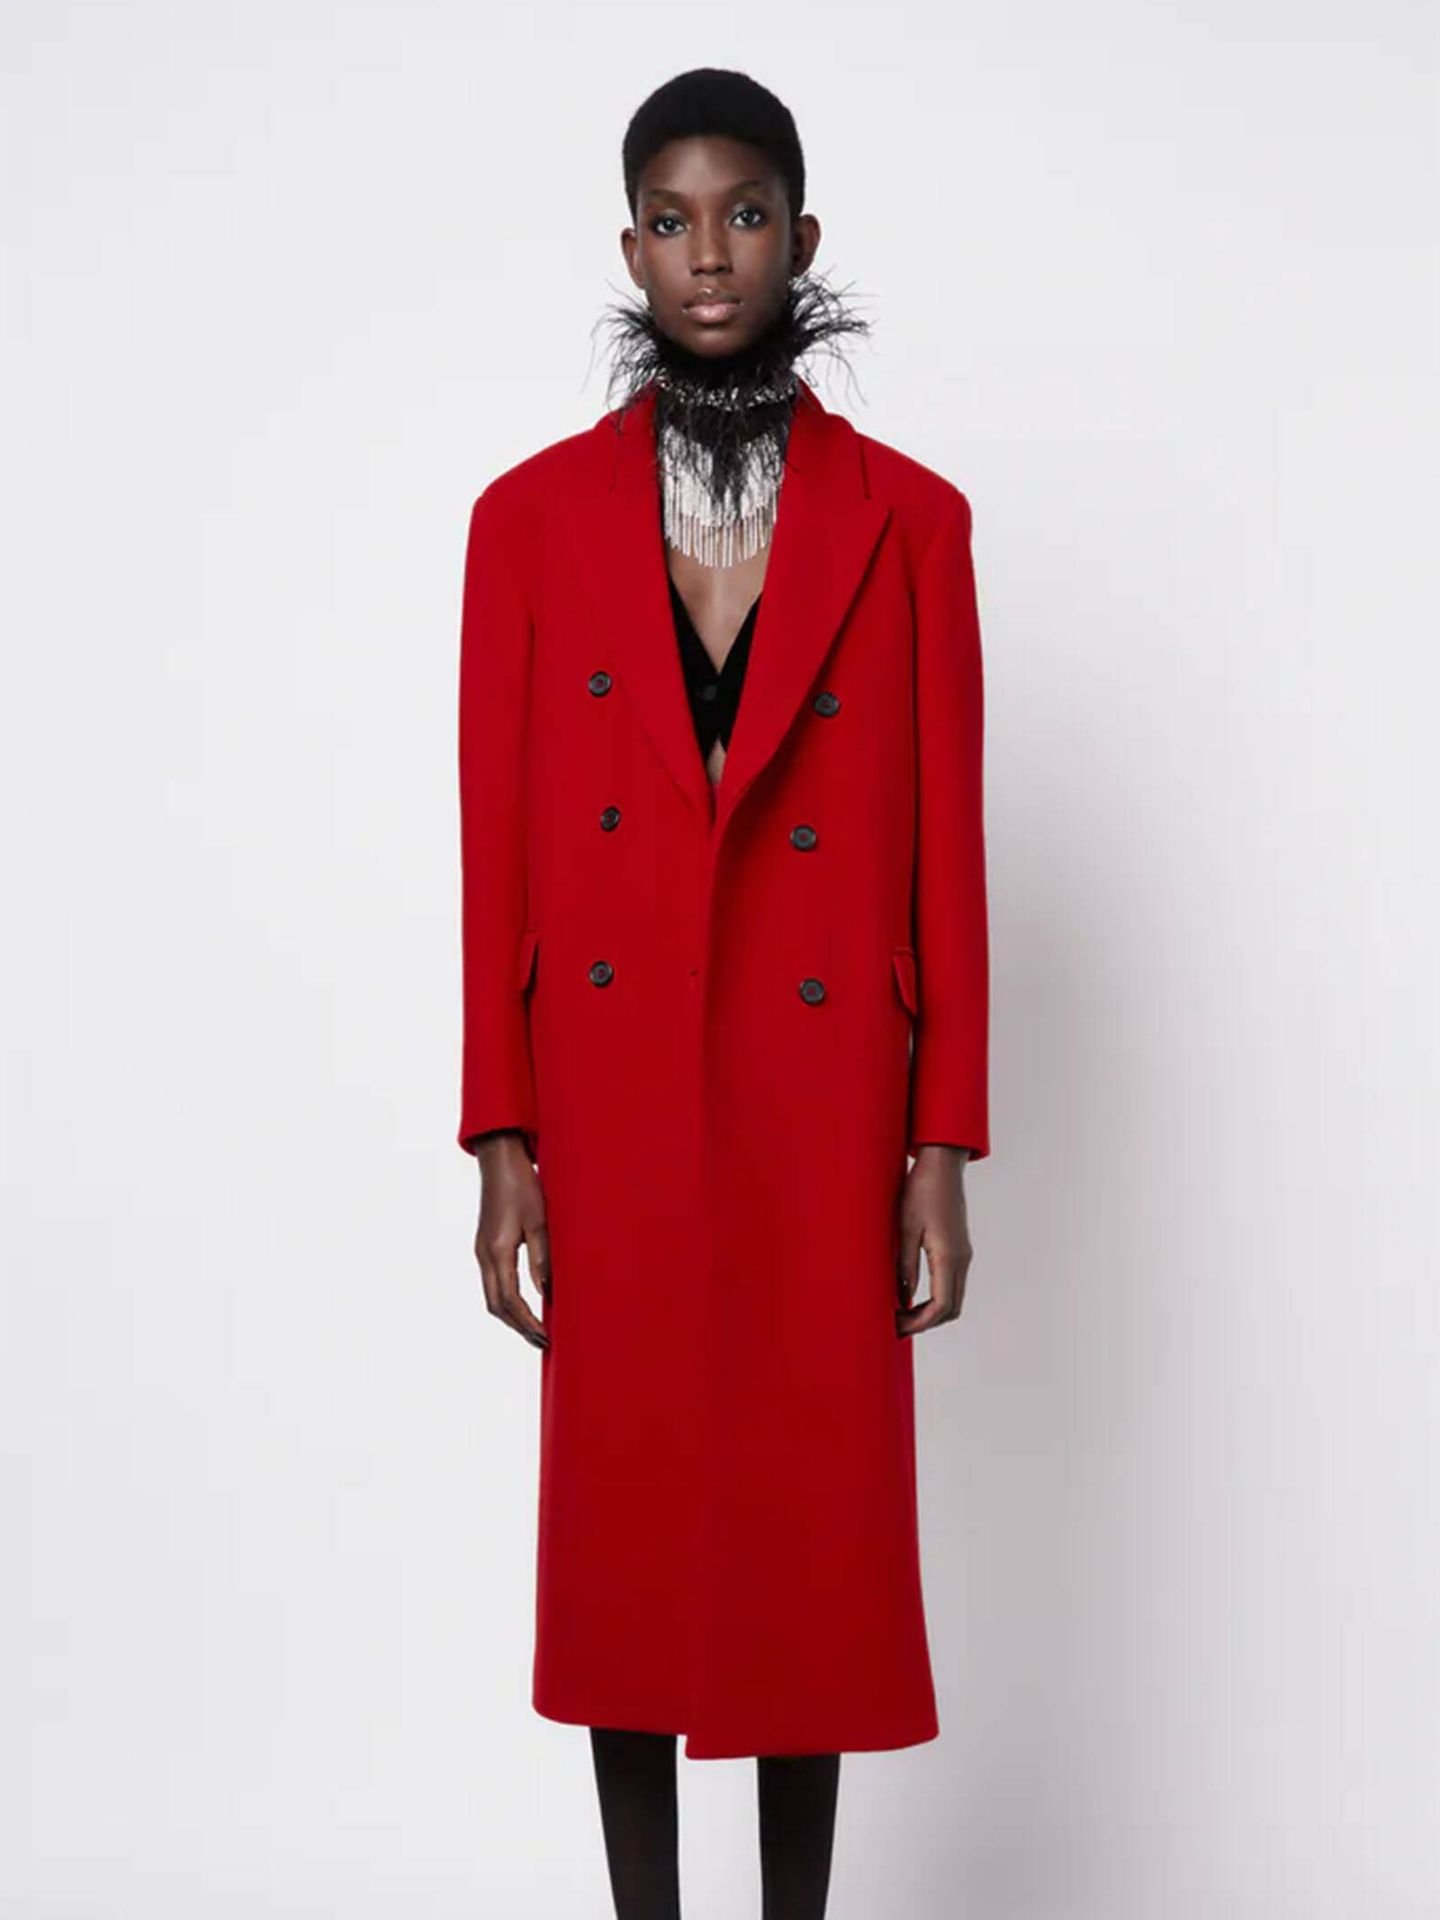 Abrigo rojo largo con cuello de solapas de Zara. (Zara/Cortesía)